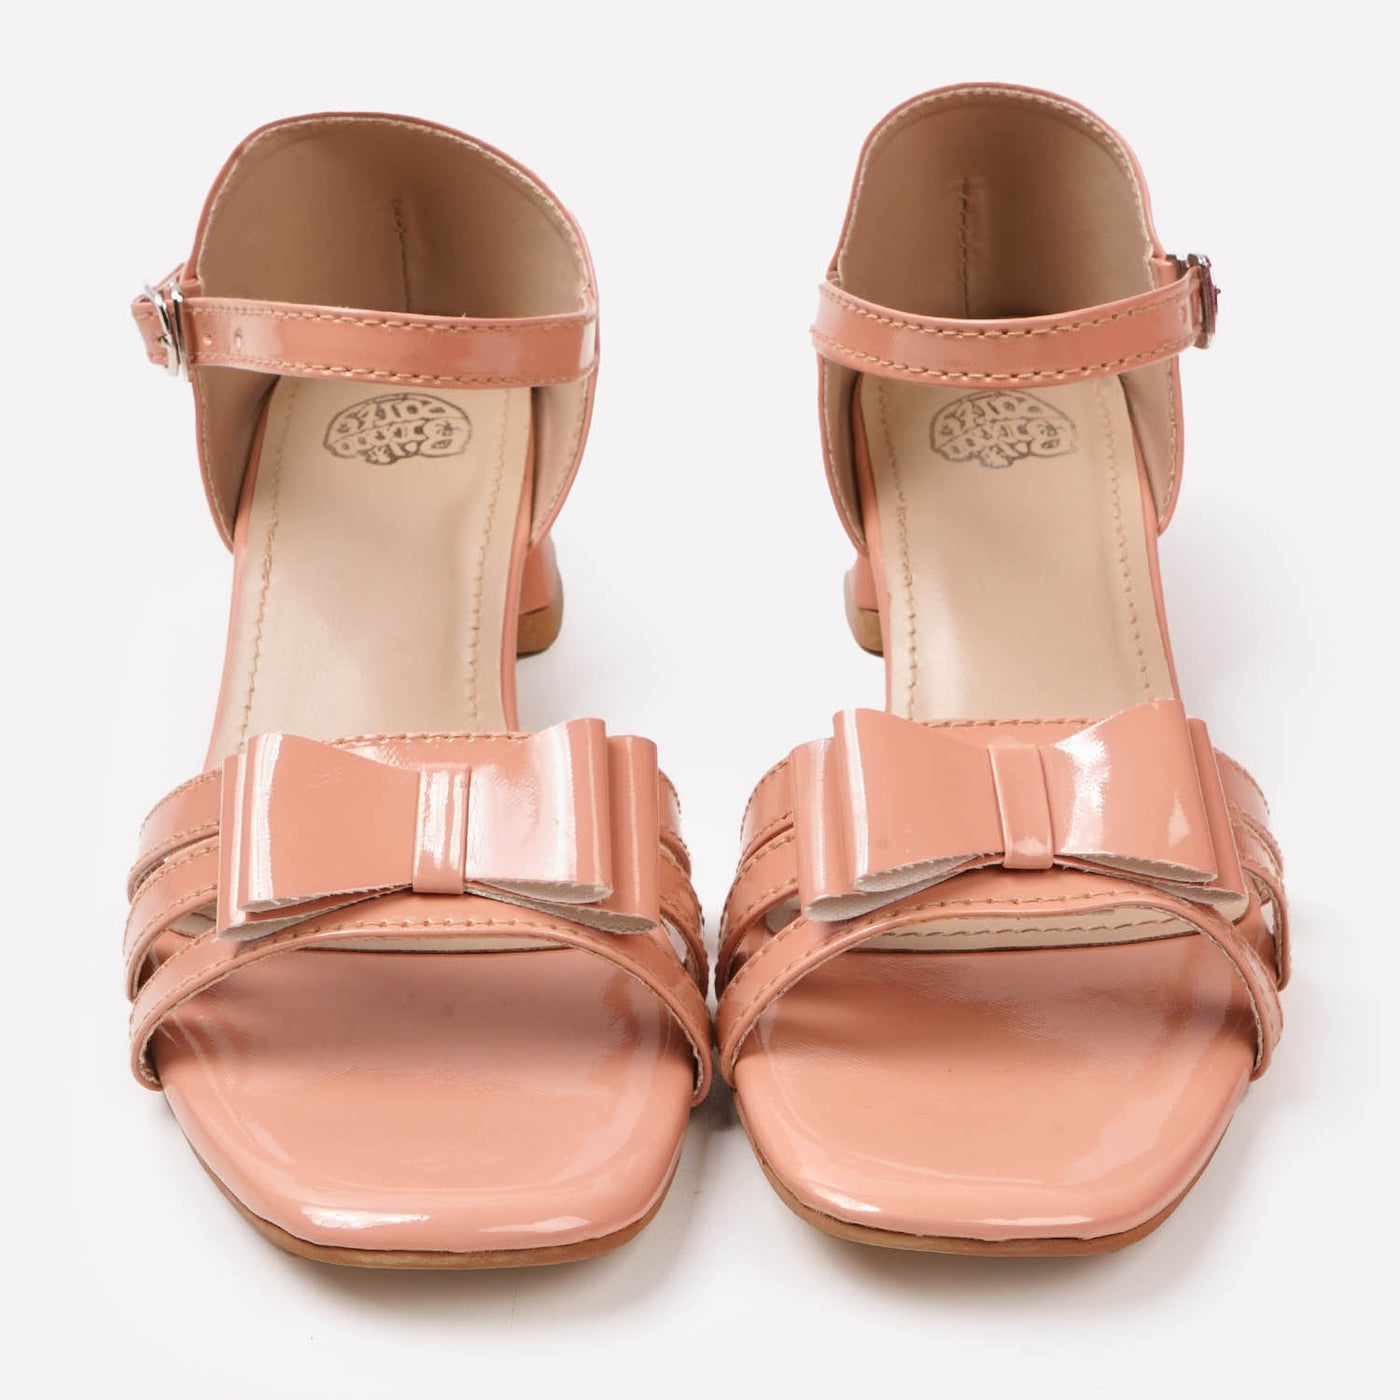 Girls Sandal Heels SD-13 - Peach